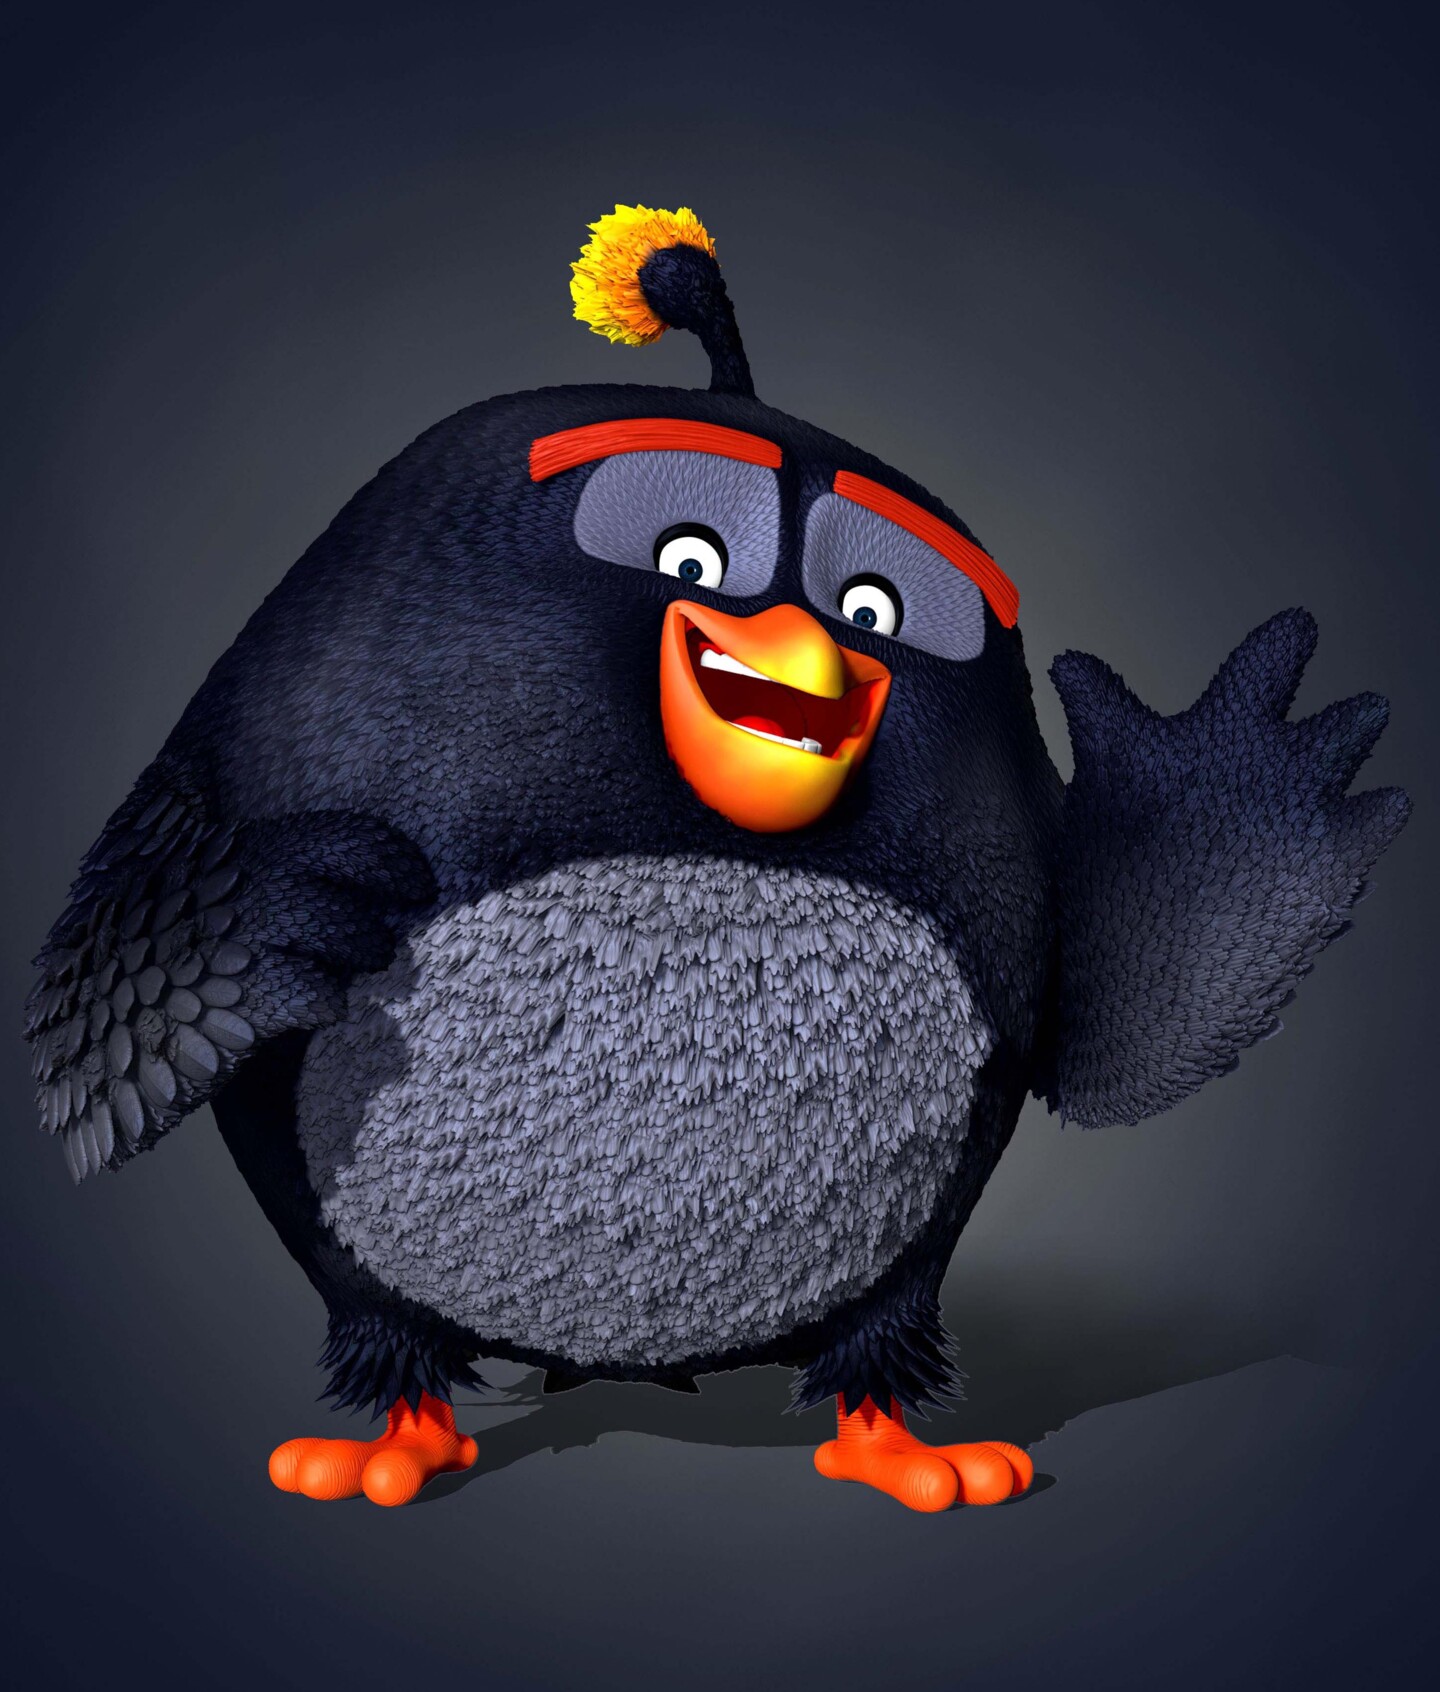 angry bird black bird wallpaper